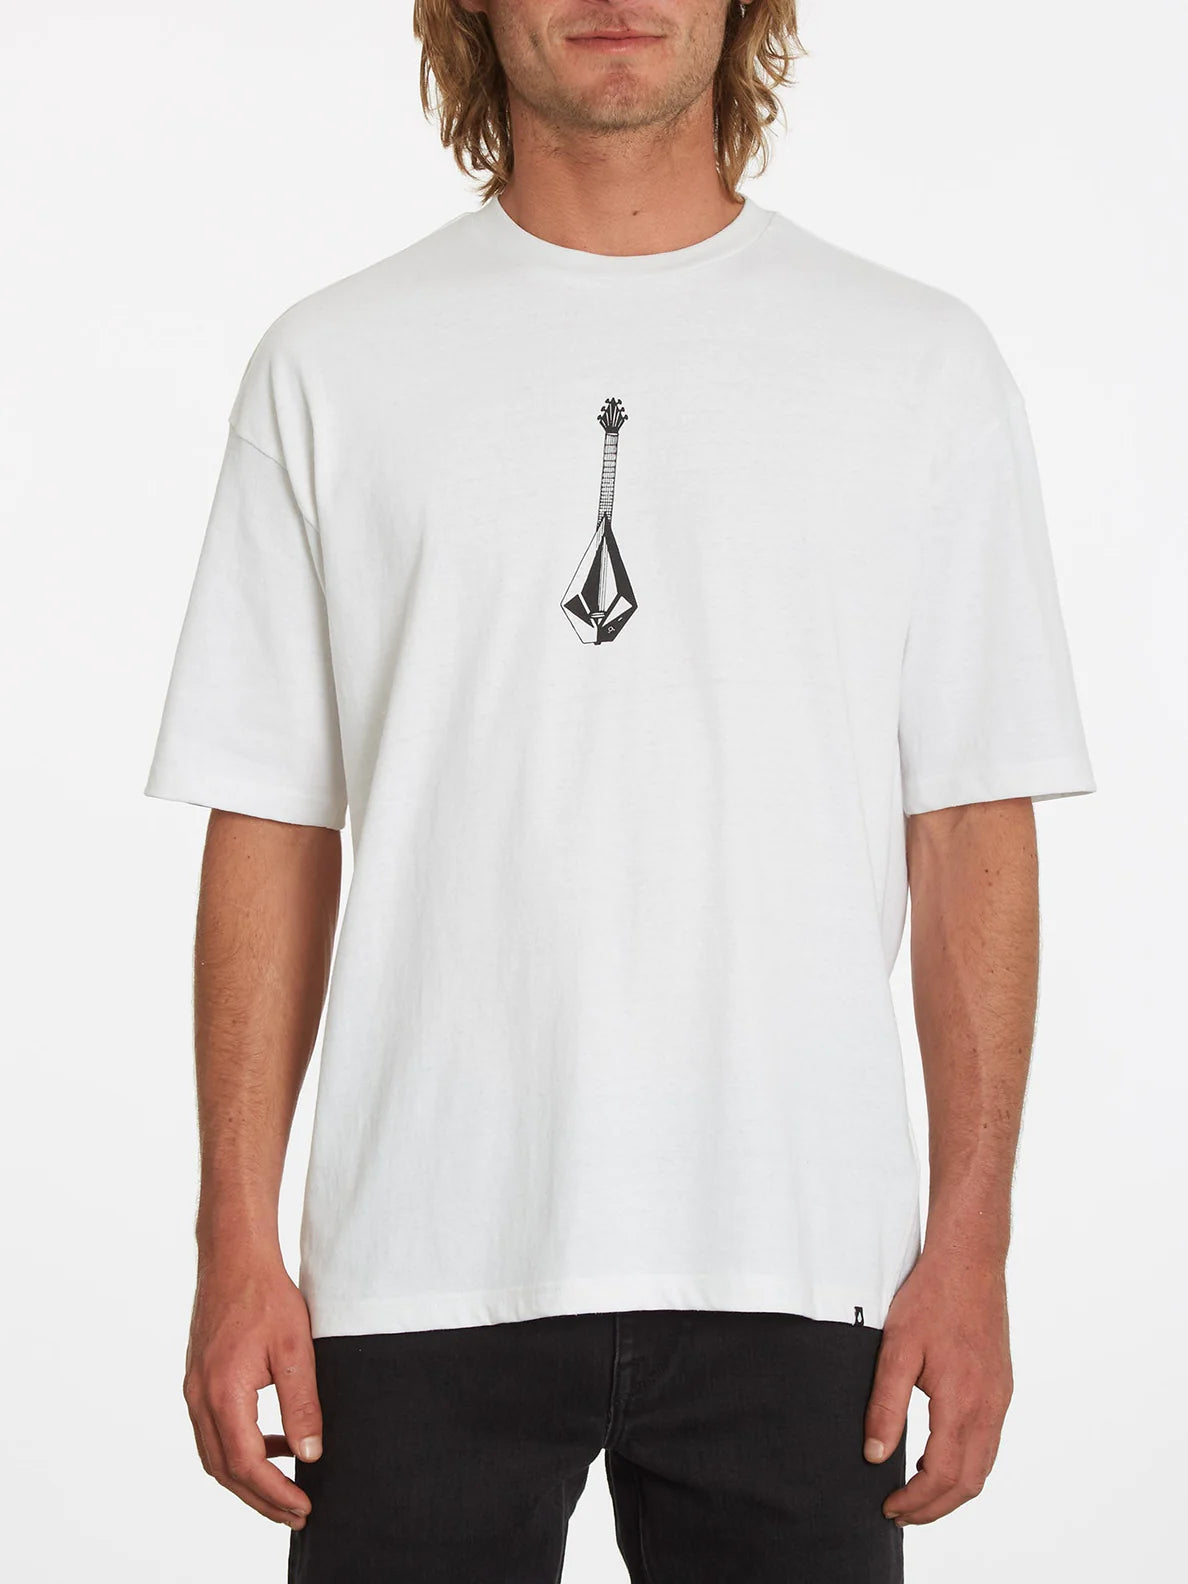 Camiseta Volcom Shredead White